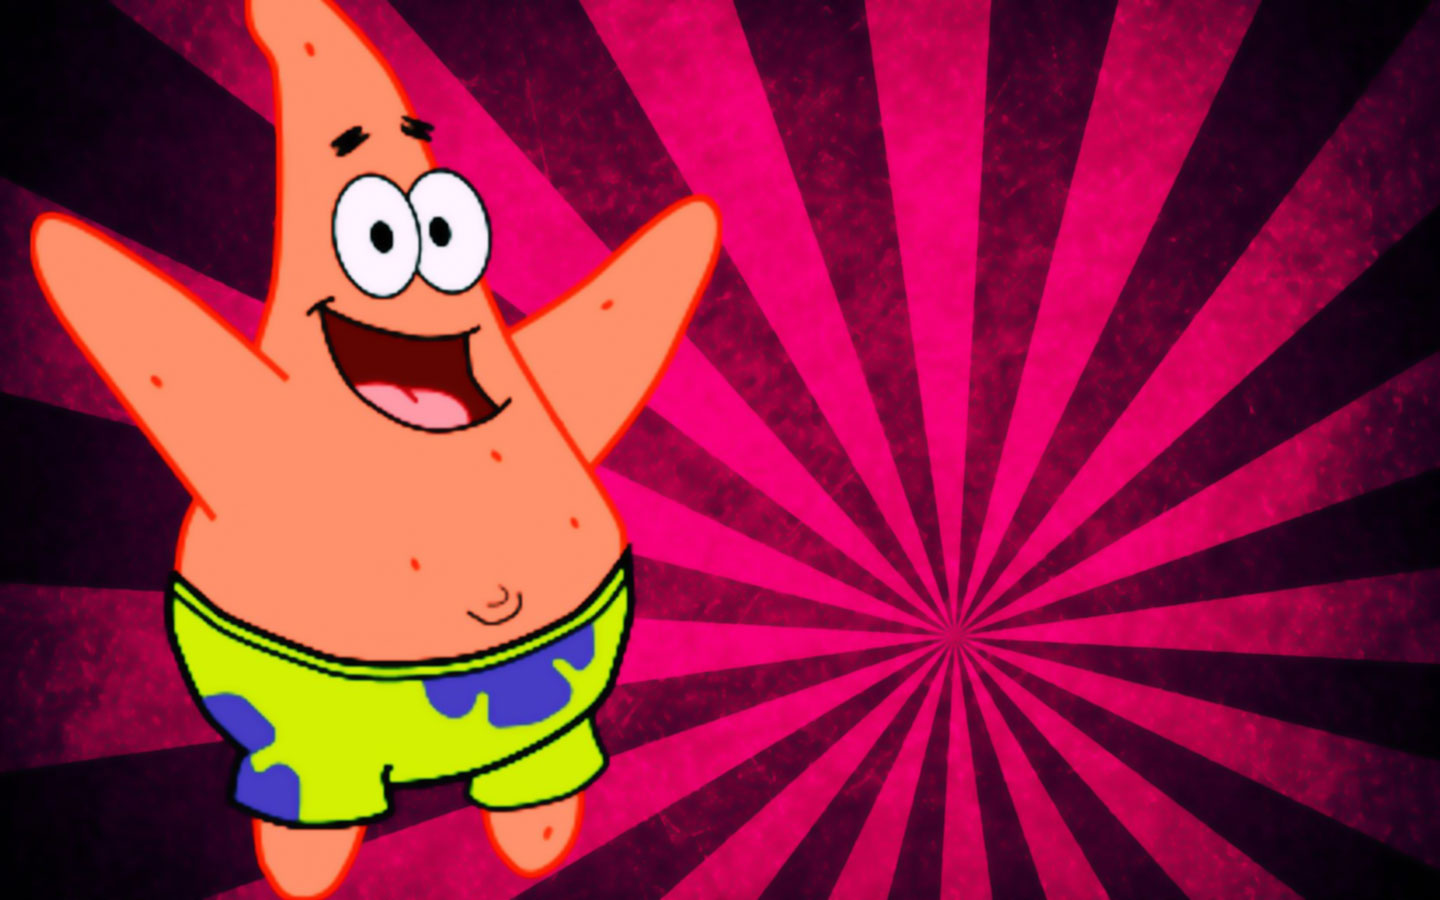 Patrick wallpaper - Spongebob Squarepants Wallpaper (40607115) - Fanpop